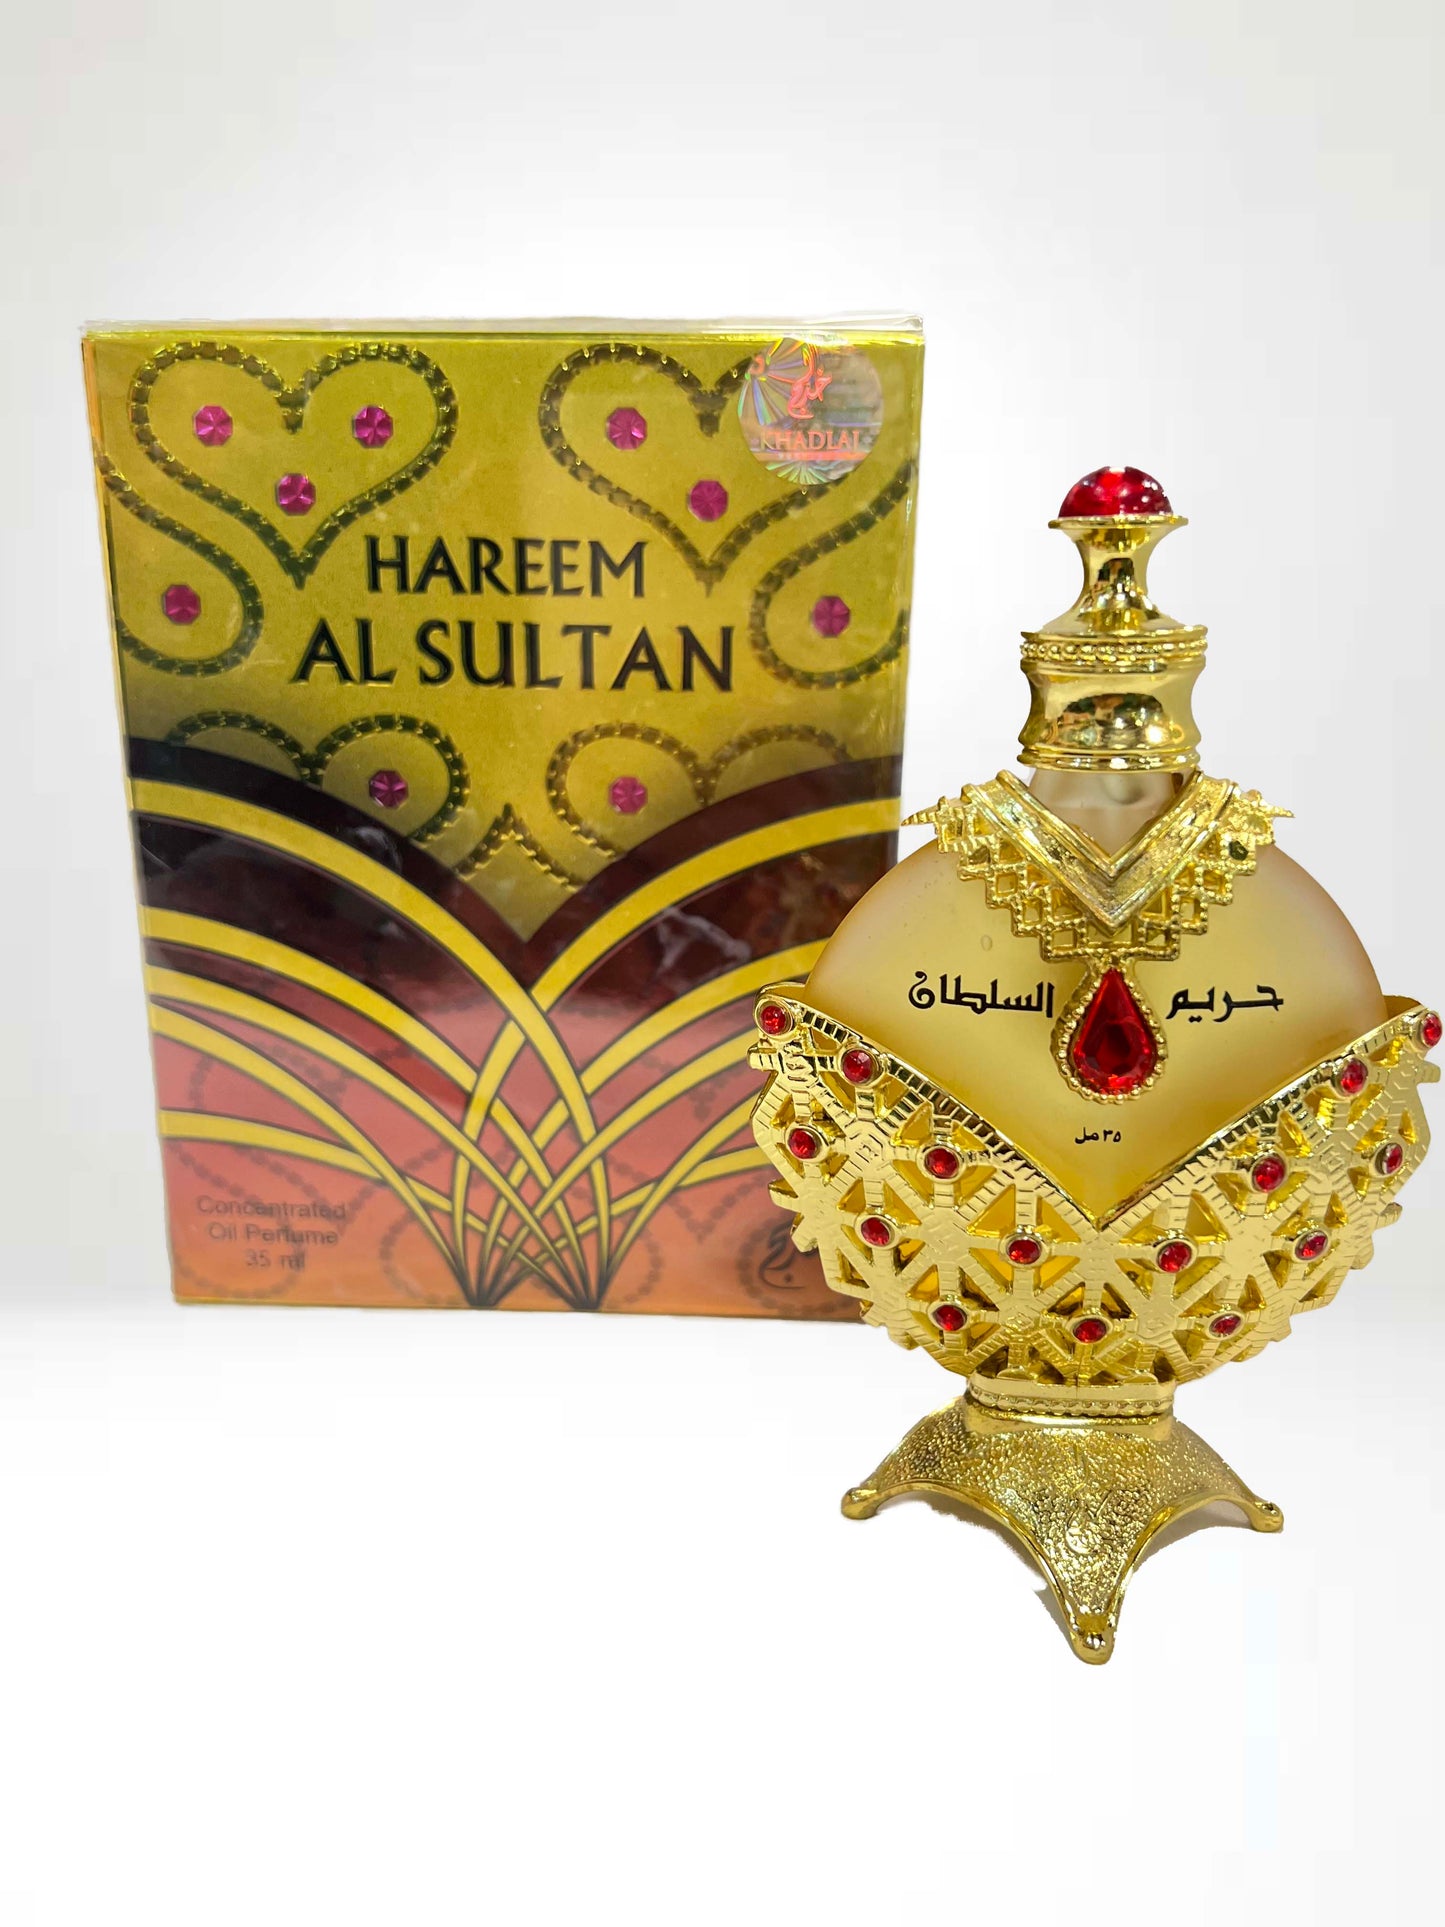 Hareem Al Sultan Gold 35ml